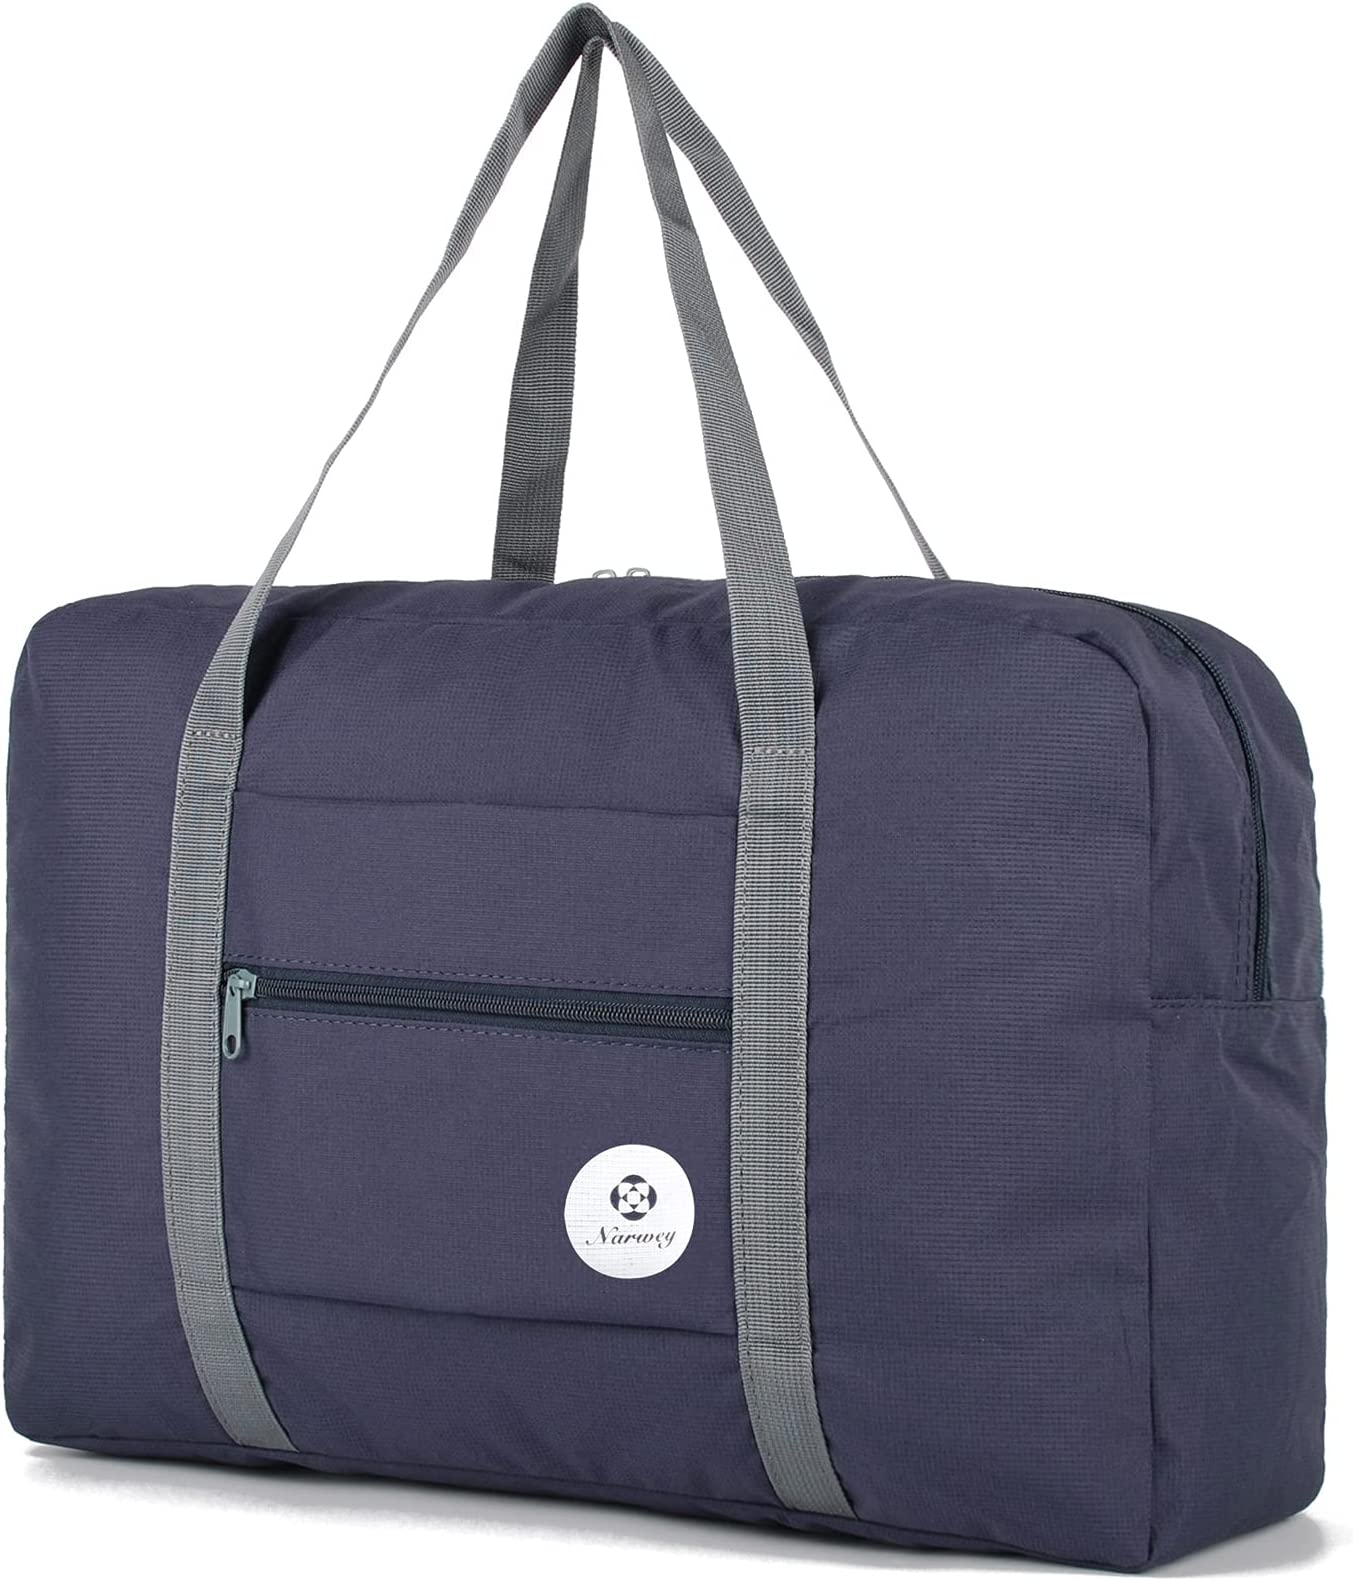 Narwey + Travel Duffel Bag